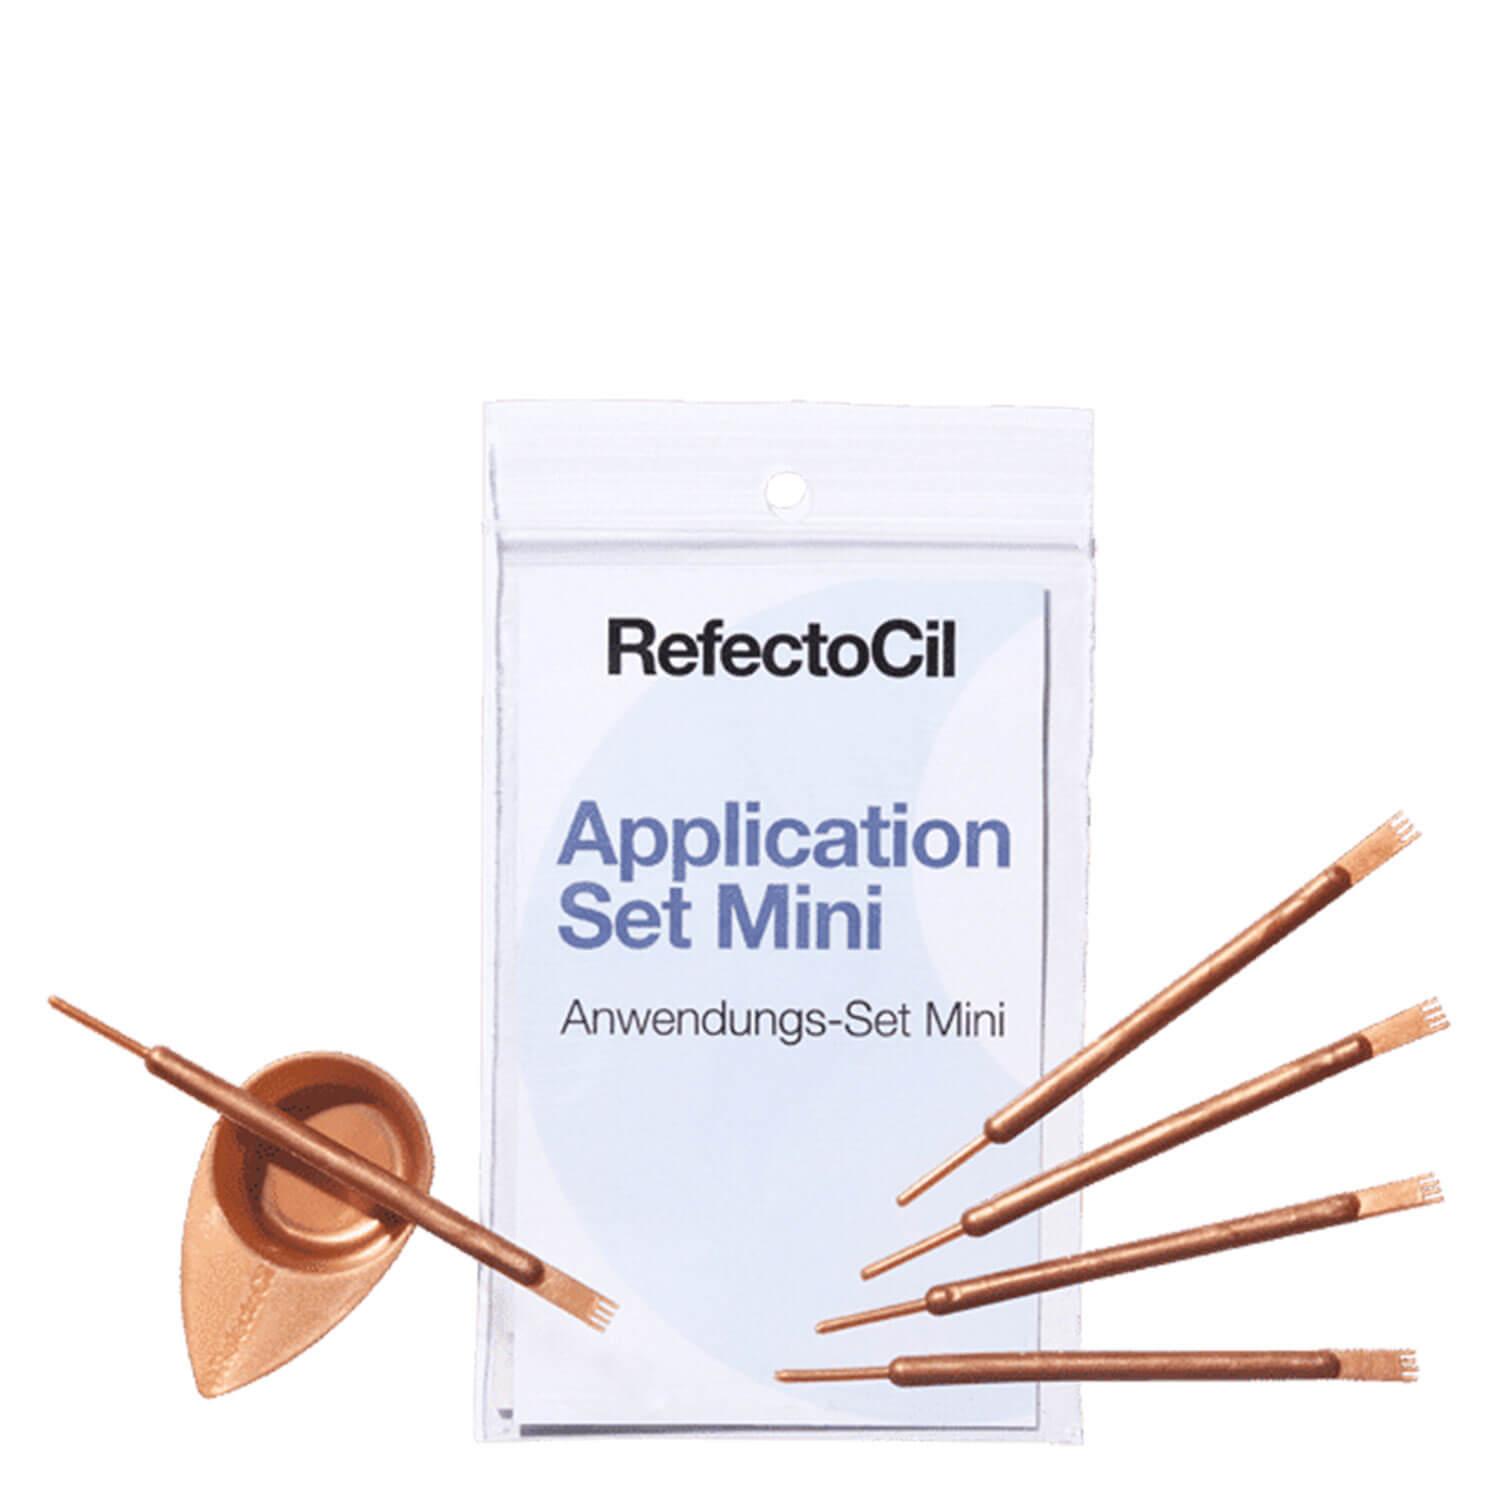 RefectoCil - Application Set Mini